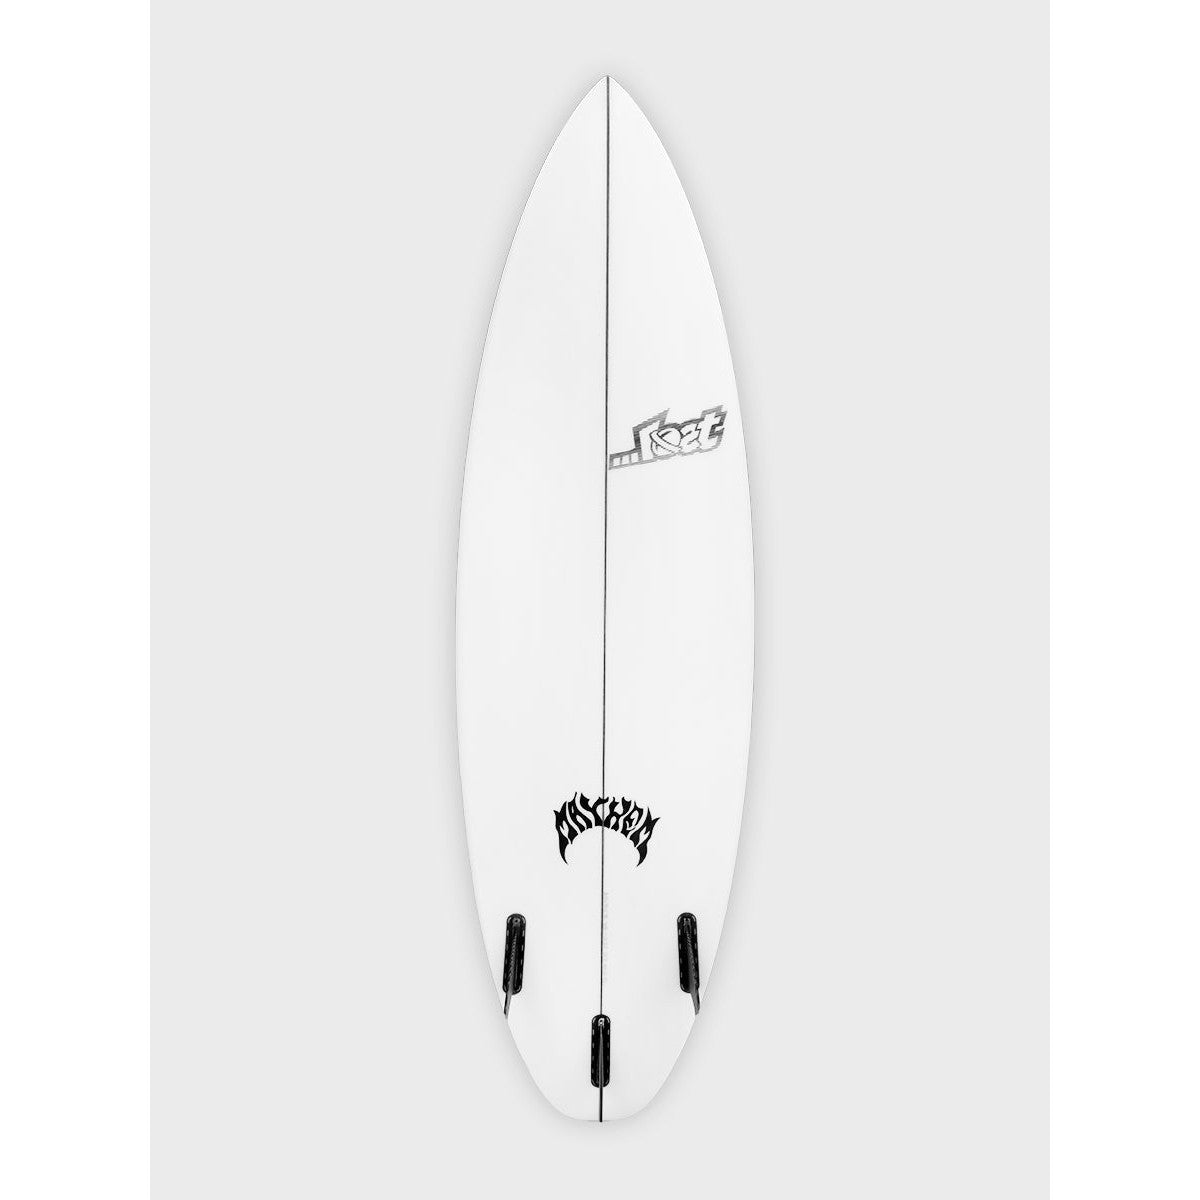 lost_surfboards-driver3.0_squash_bottom-galway-ireland-blacksheepsurfco